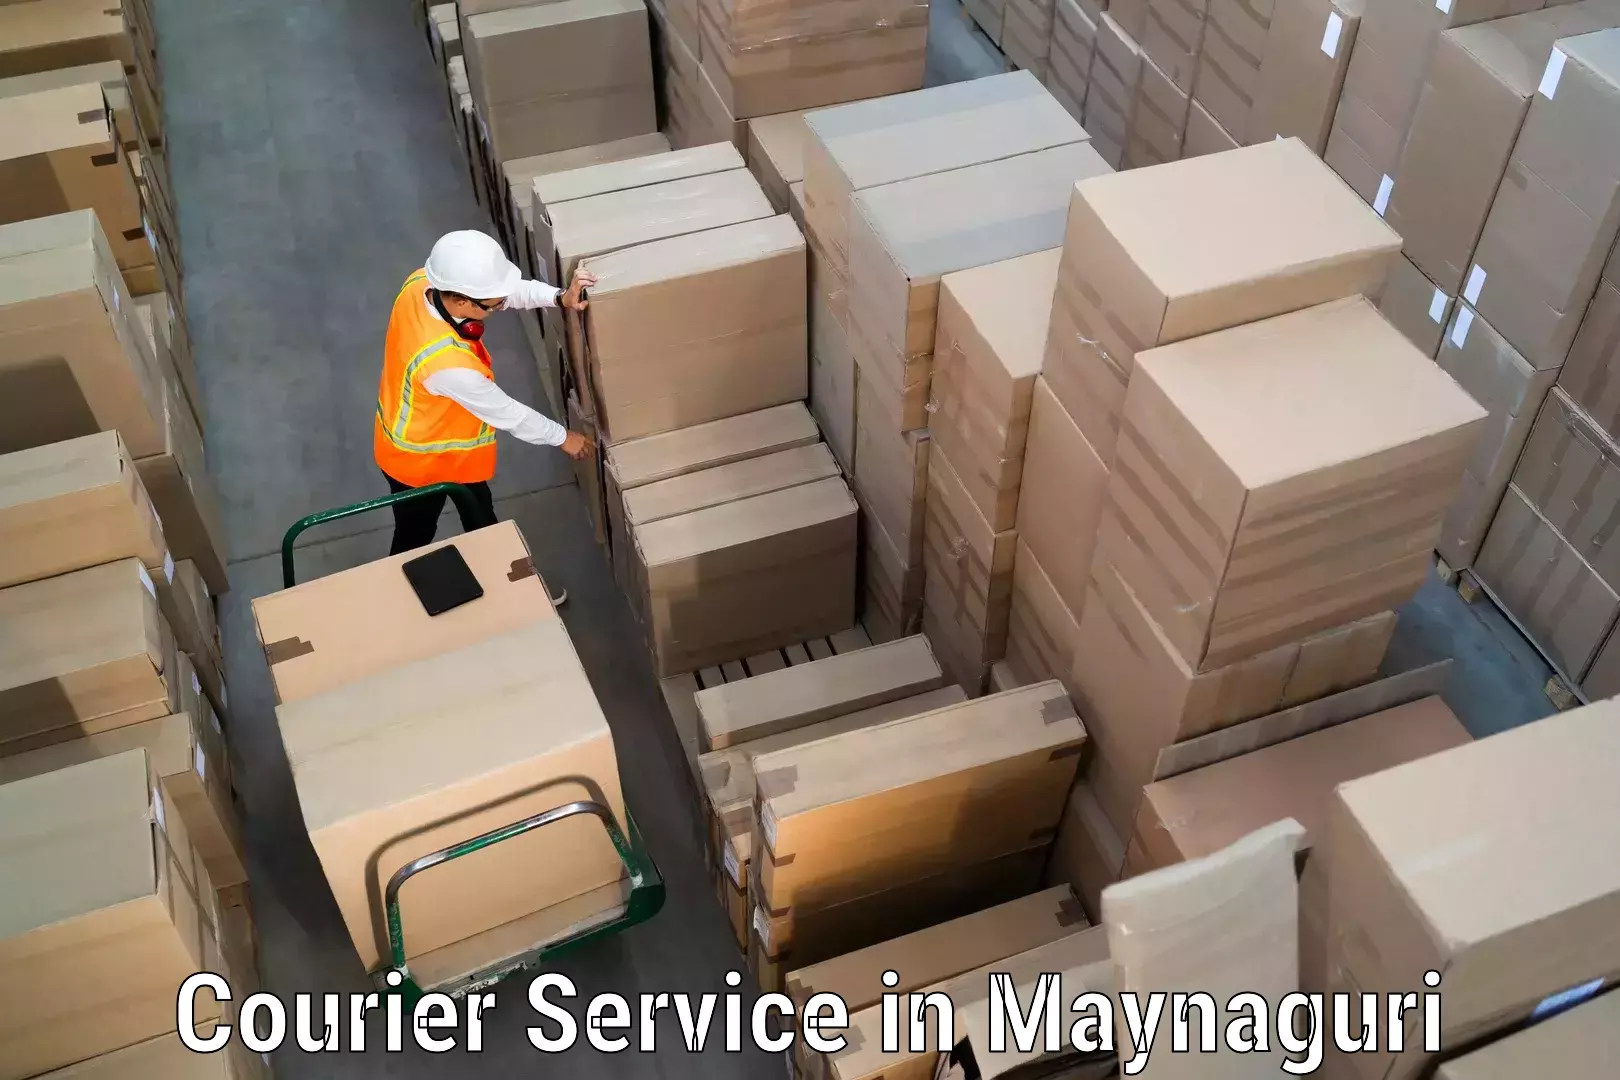 Automated shipping in Maynaguri